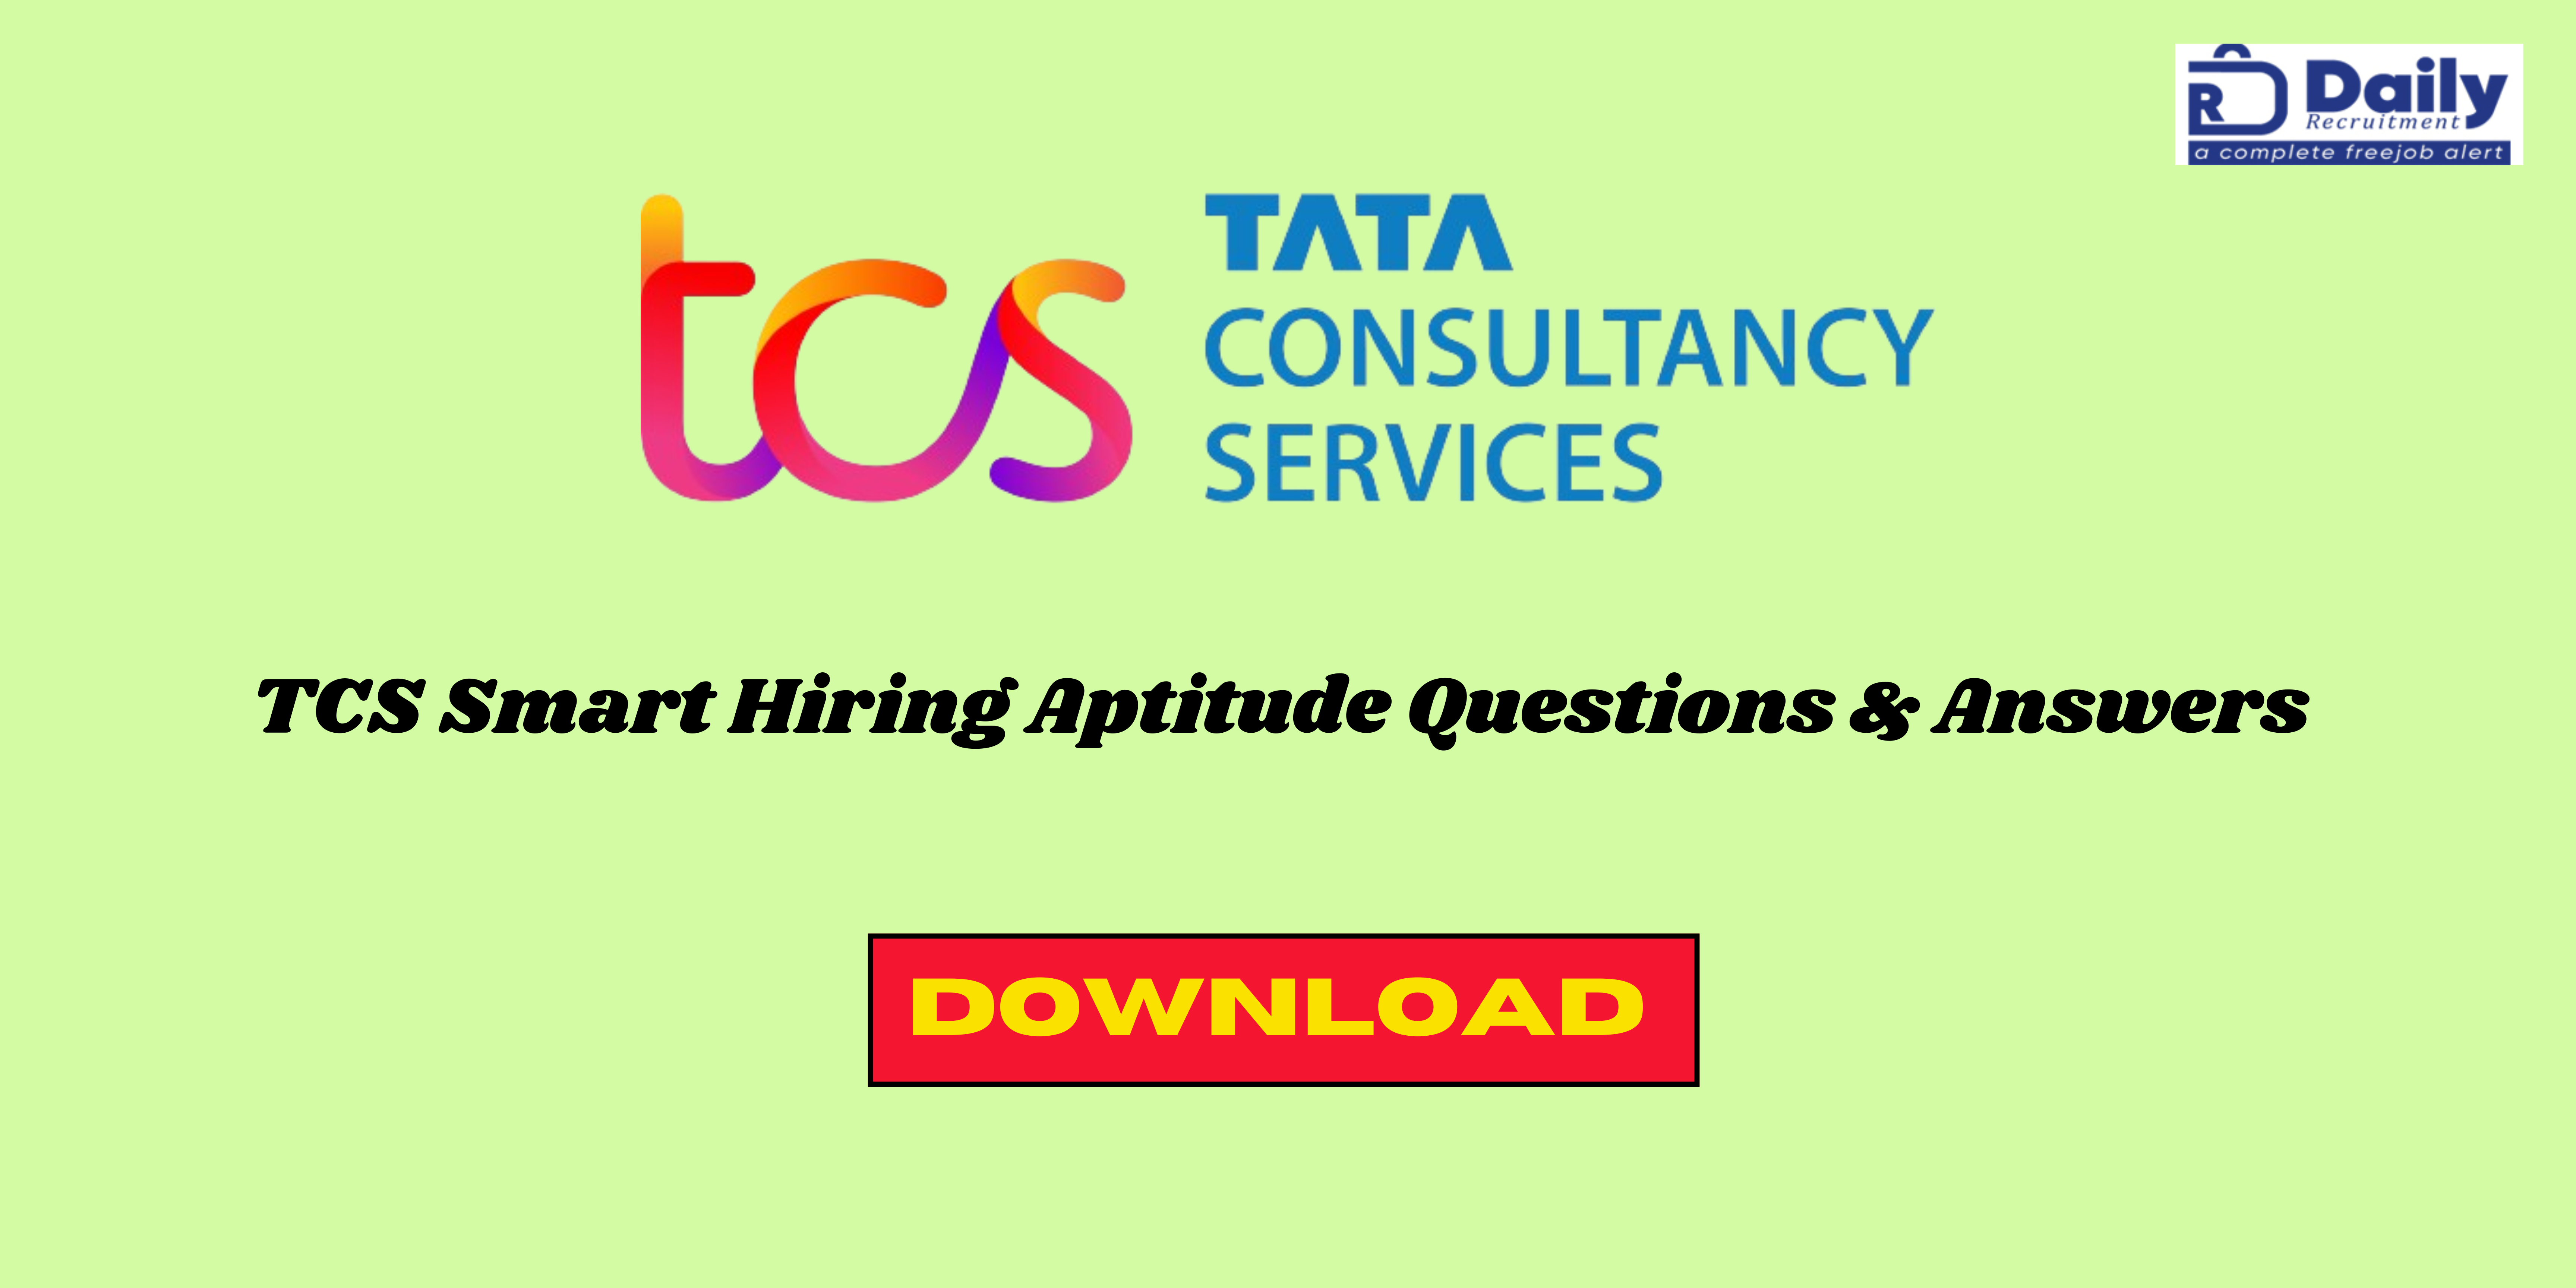 TCS Smart Hiring Aptitude Questions & Answers